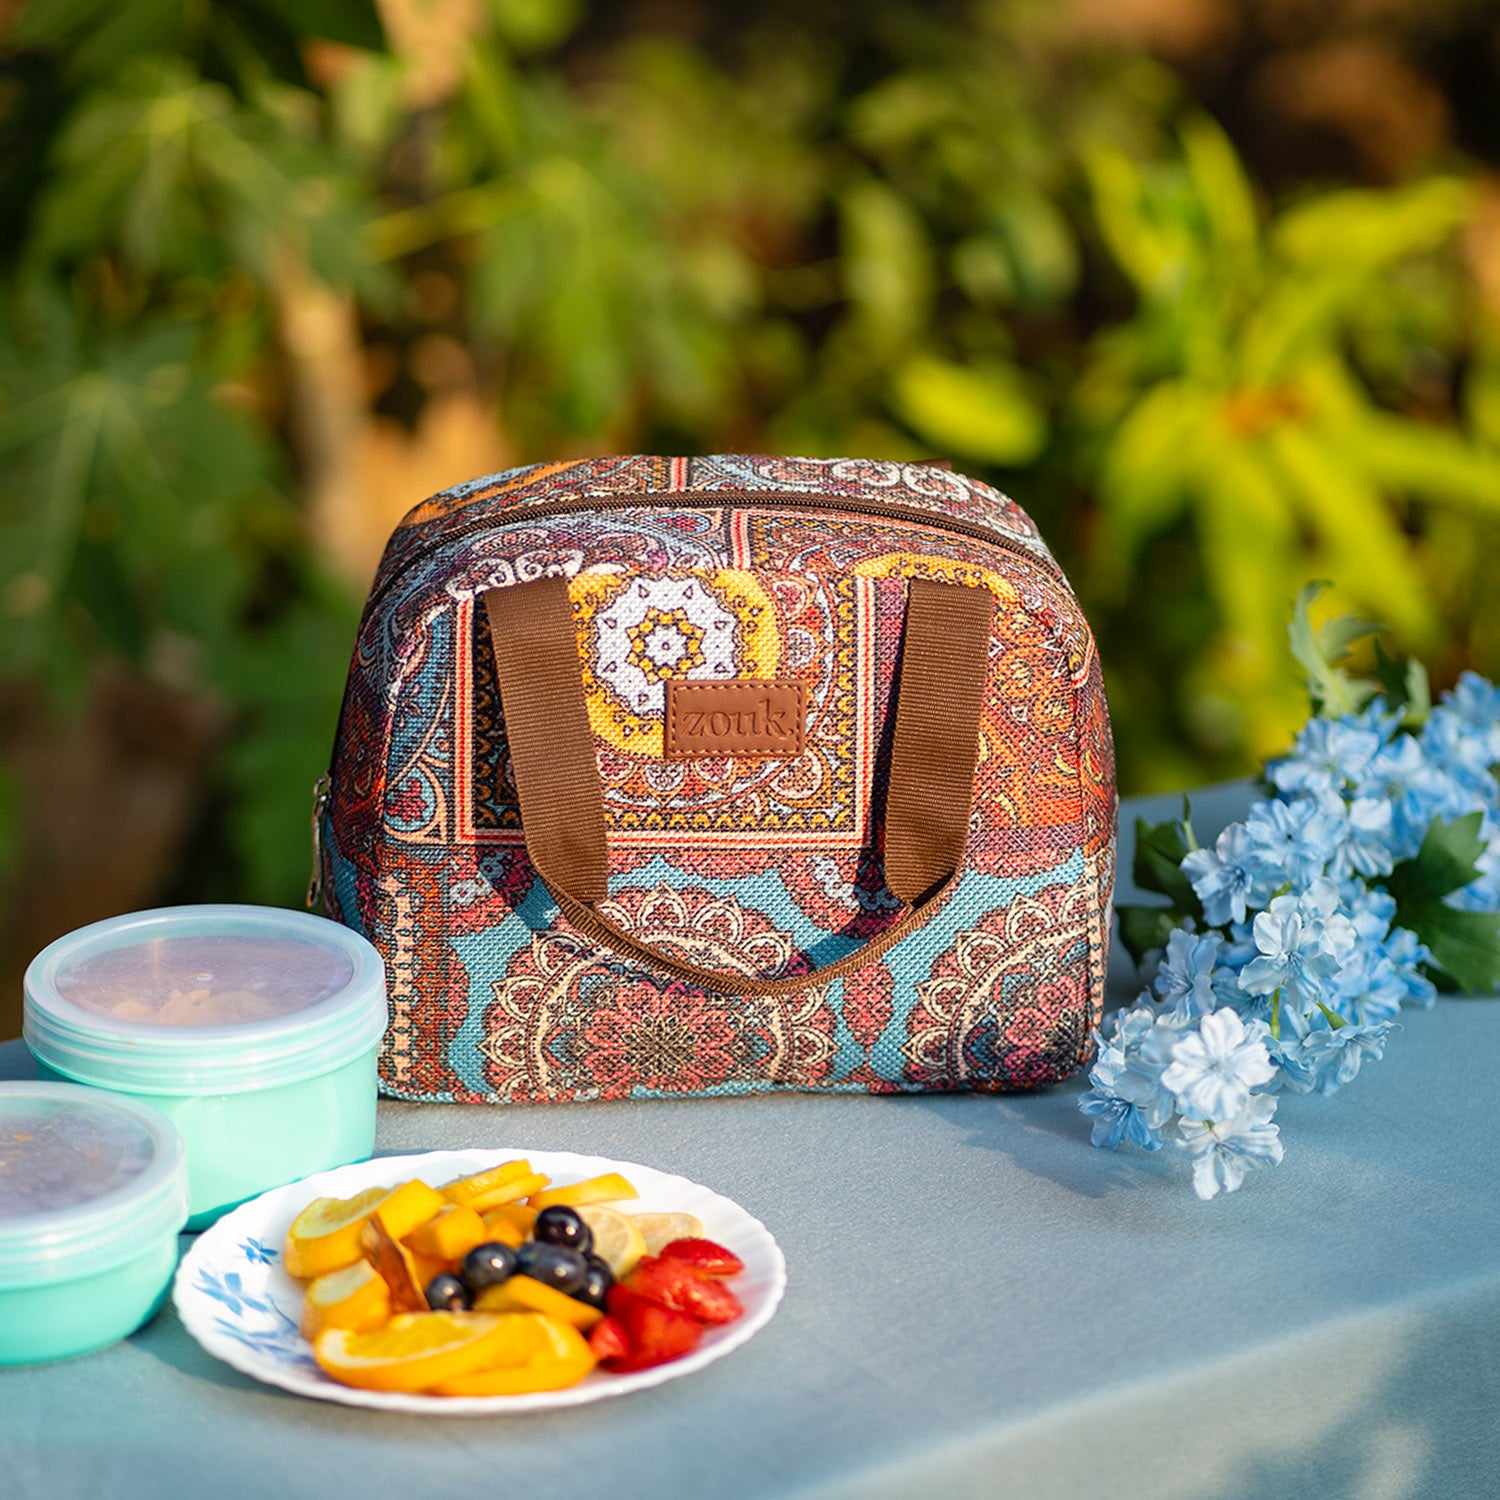 Multicolor Mandala Print Lunch Bag